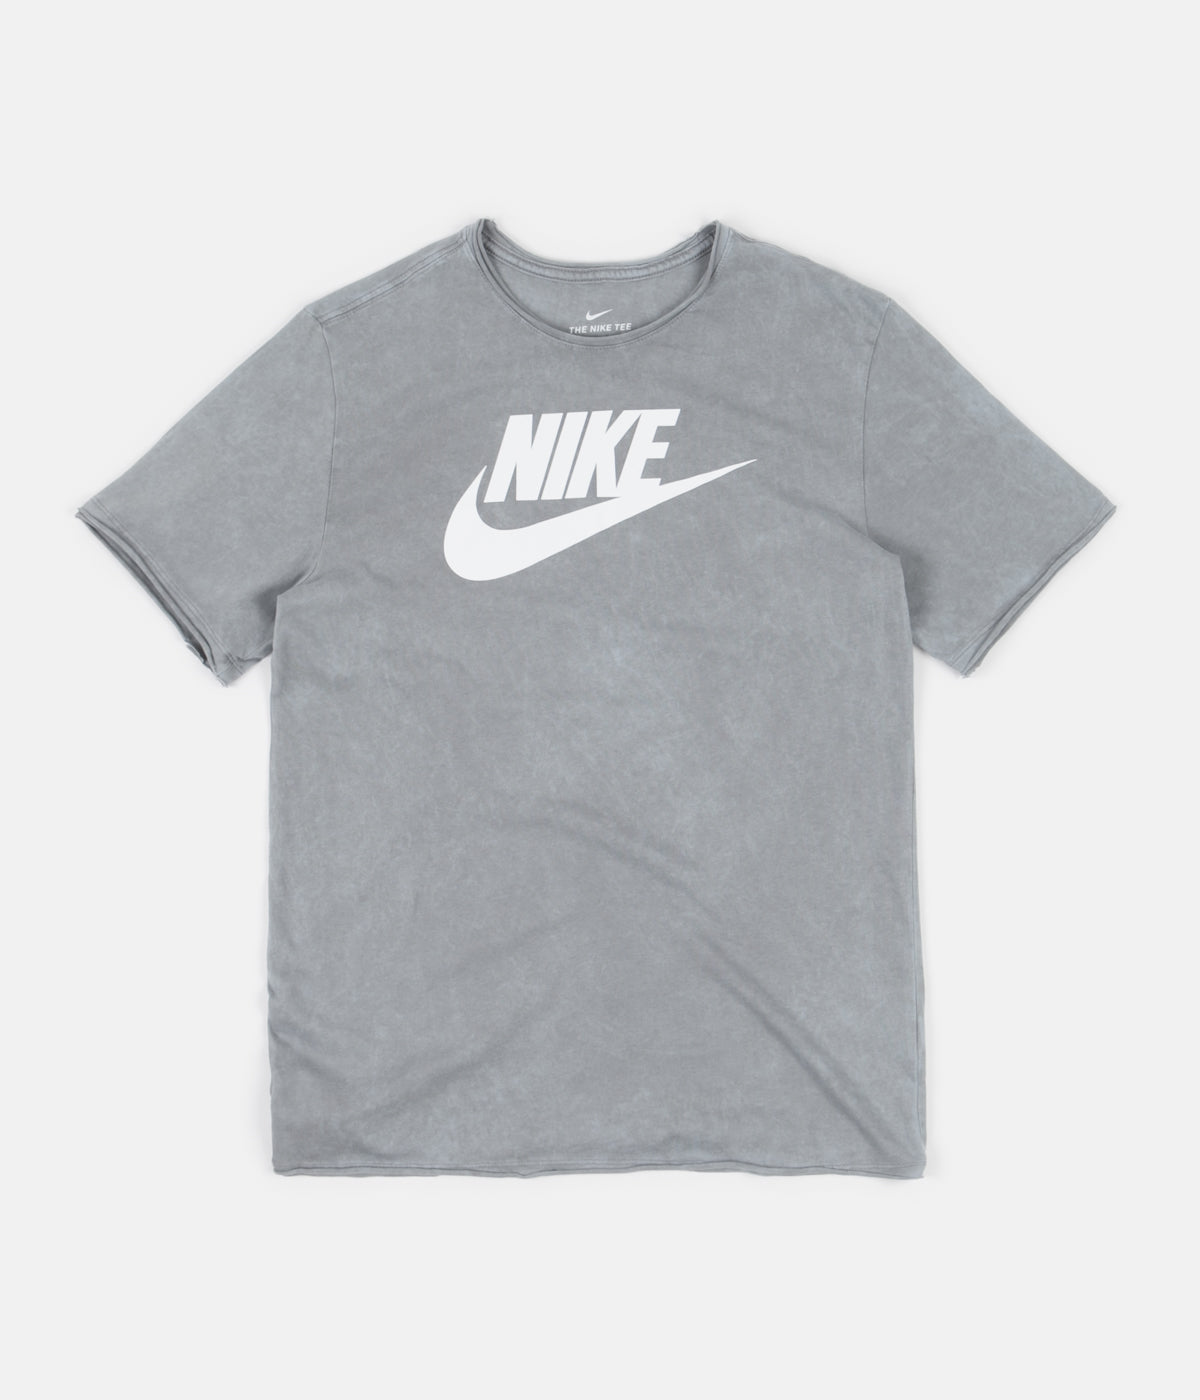 grey and white nike t shirt